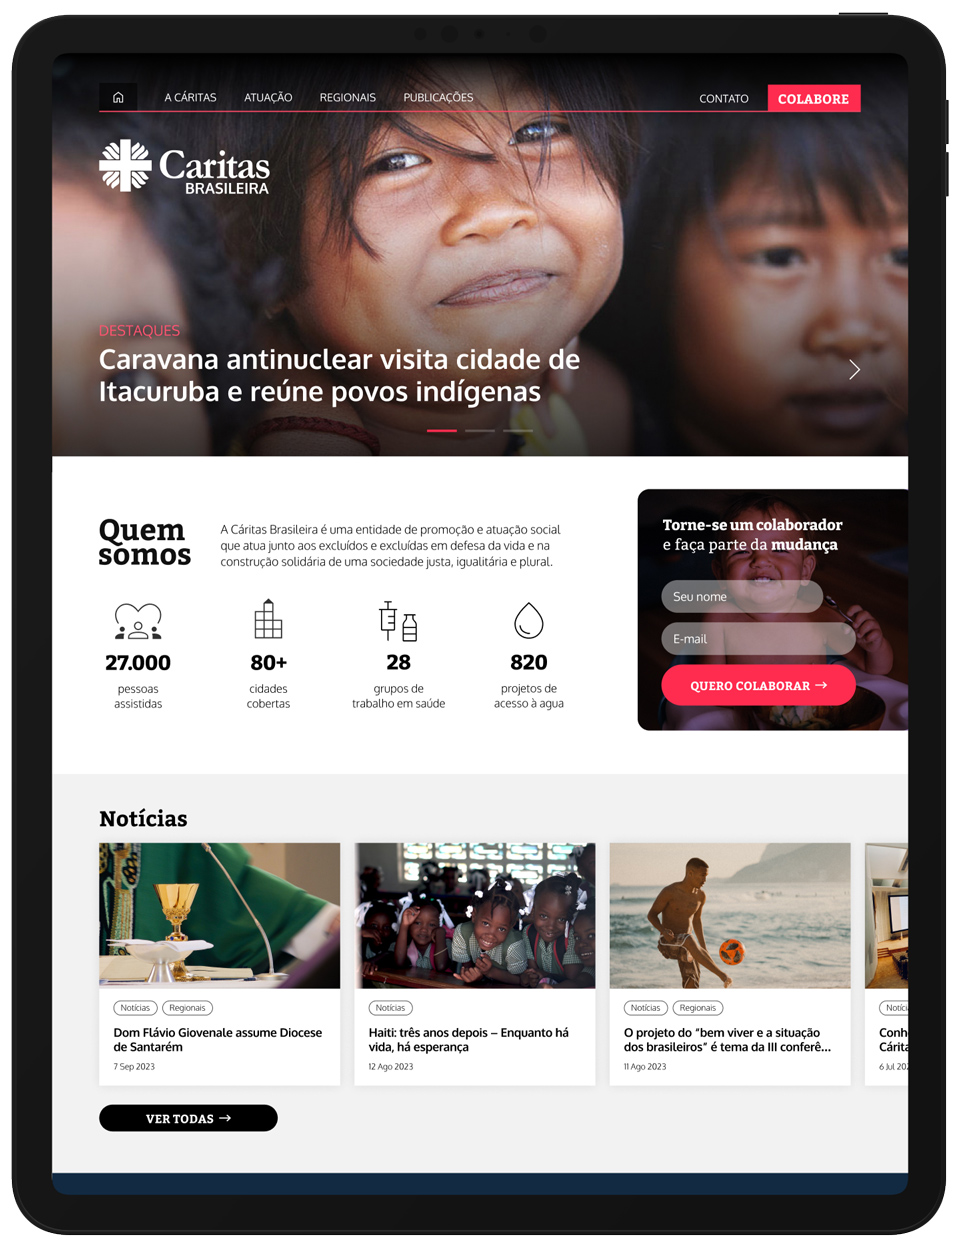 Caritas website - landing page shown on iPad